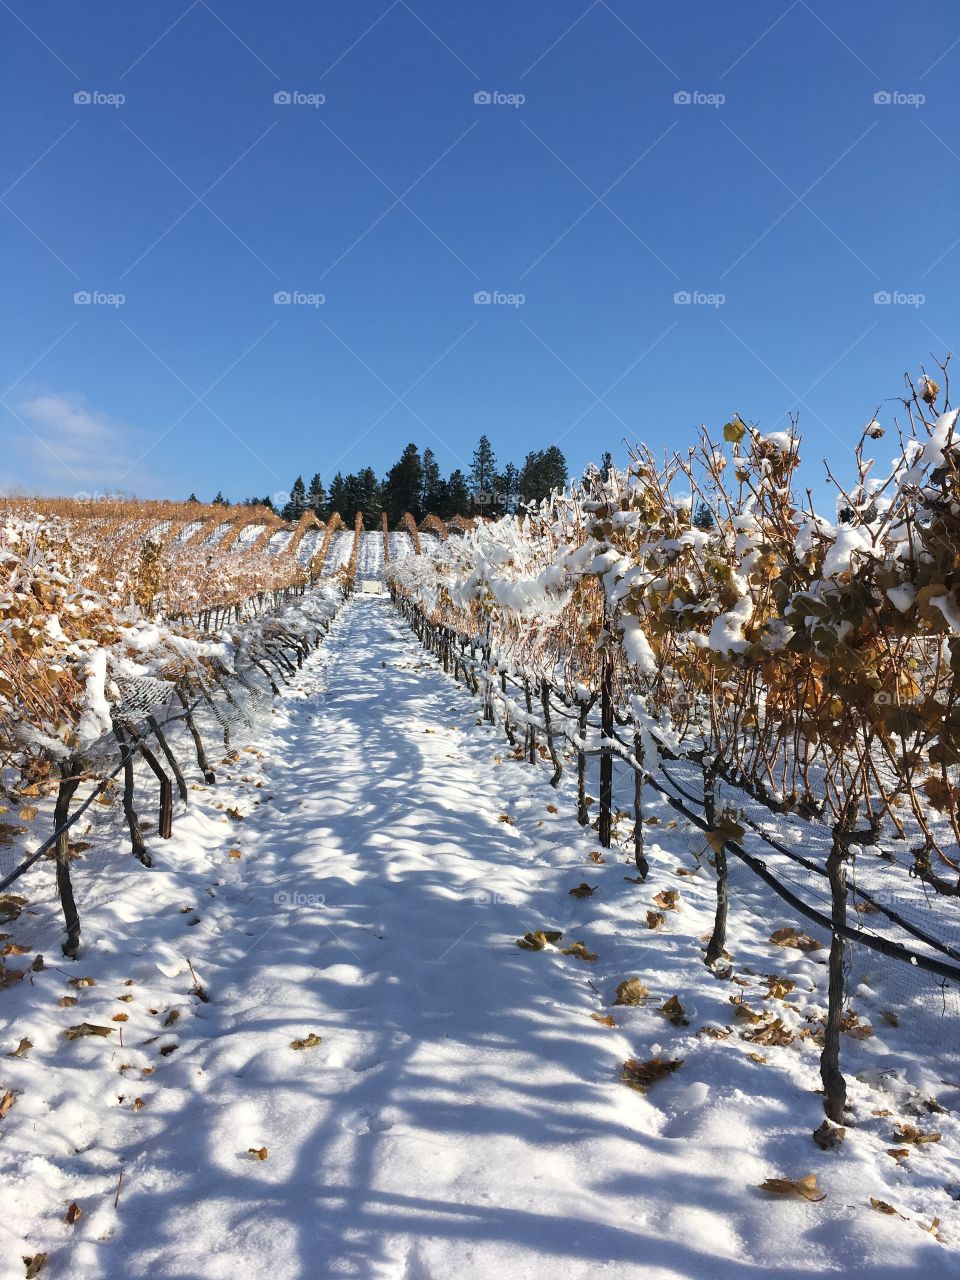 Vineyard in the winter